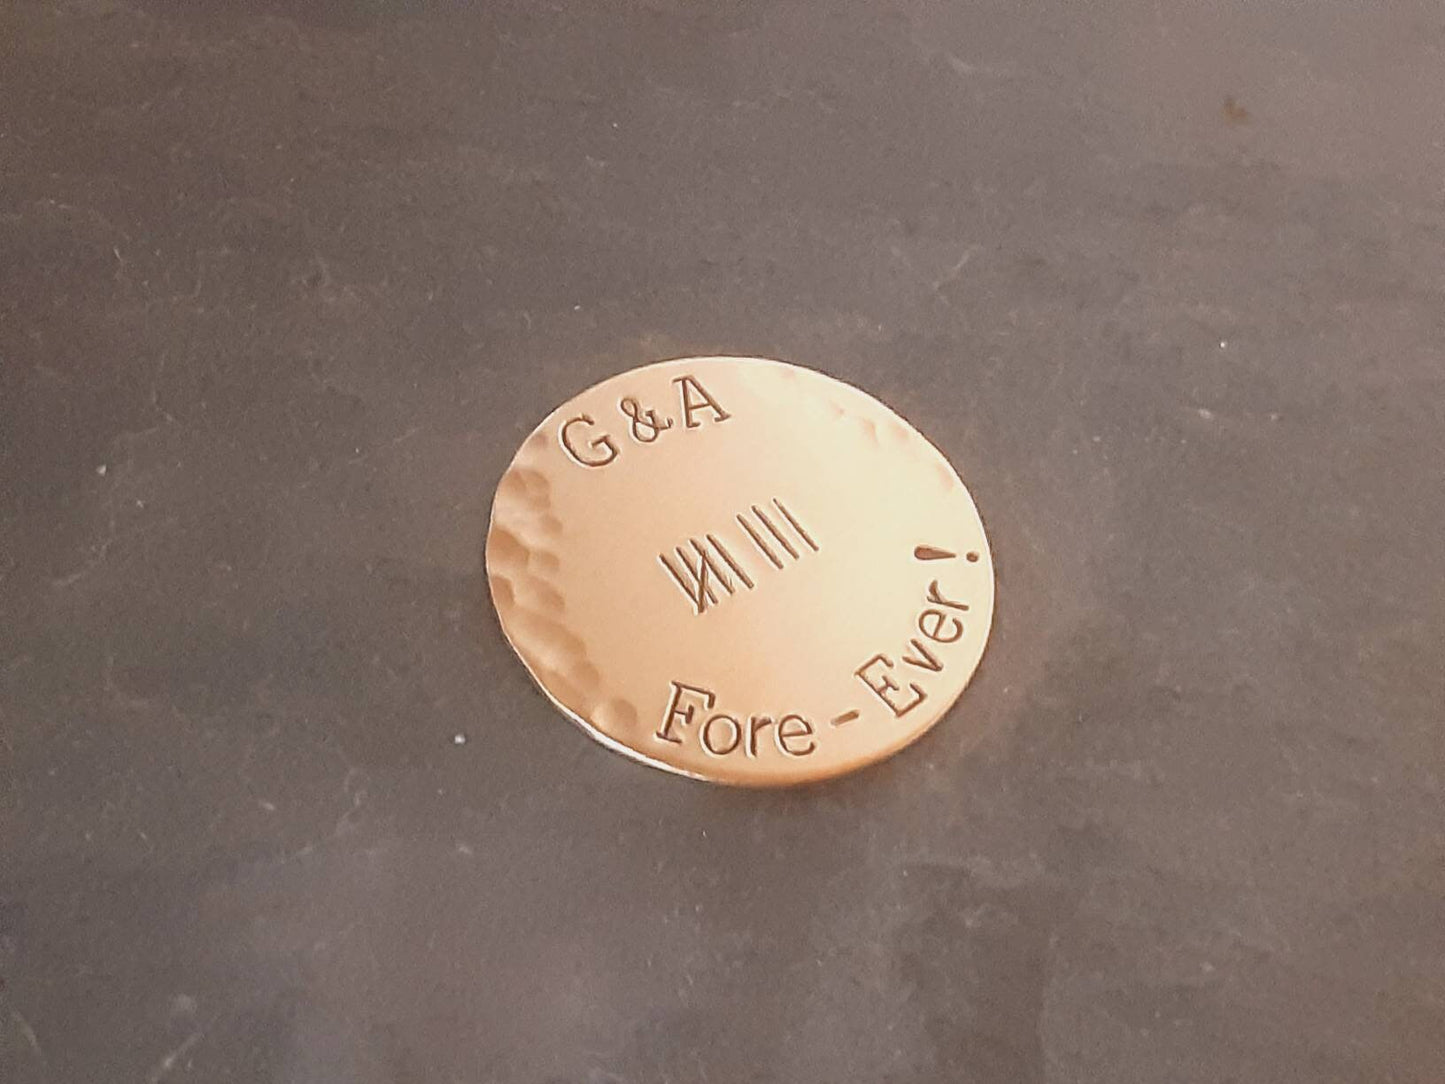 Bronze golf ball marker for 8th or bronze anniversary